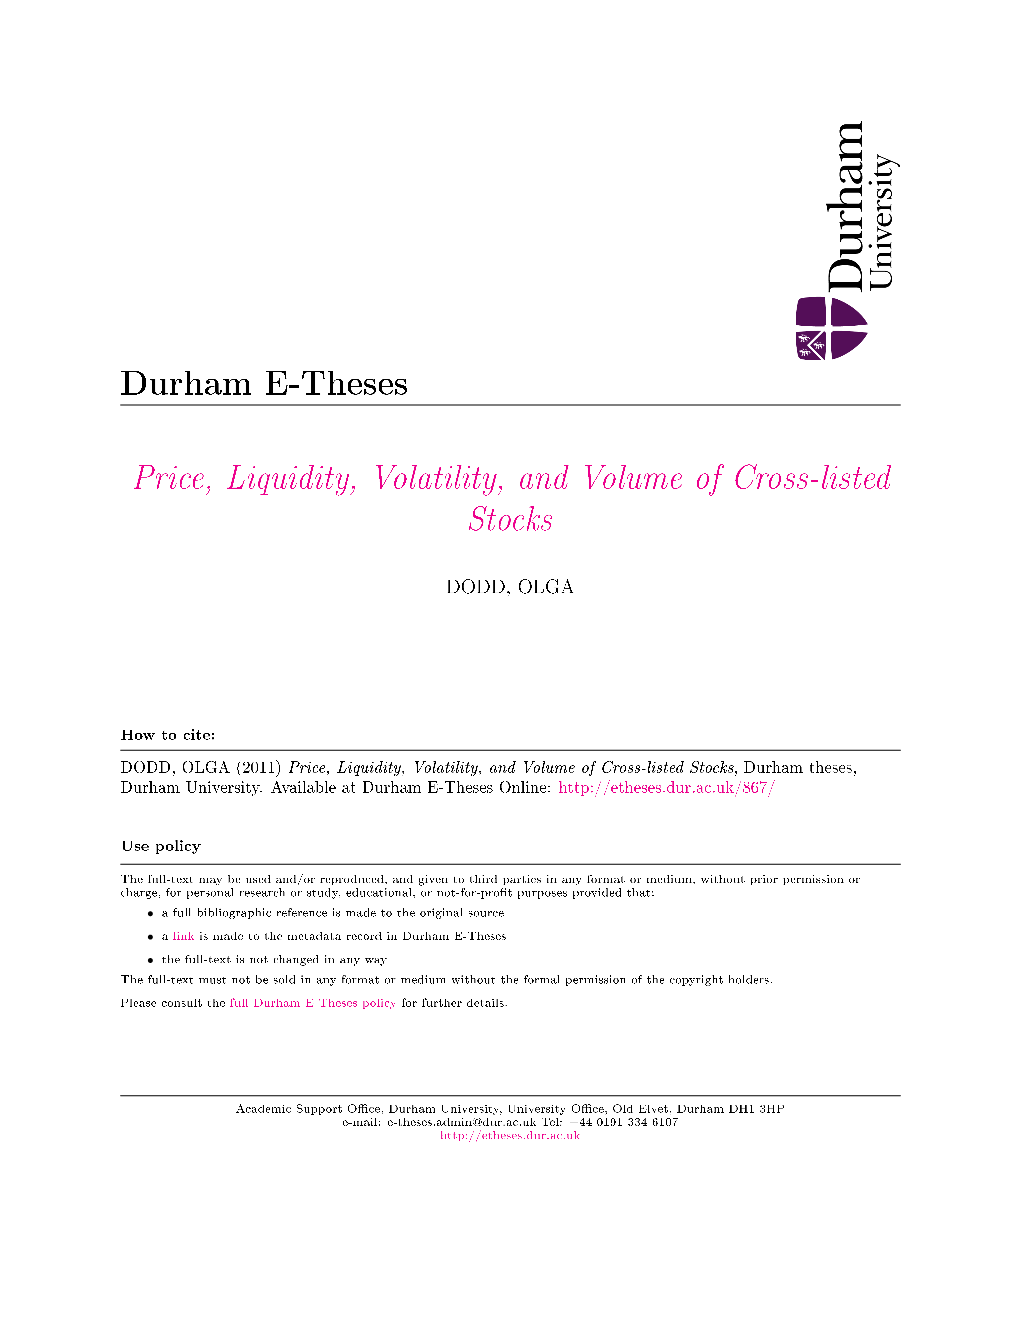 Price, Liquidity, Volatility, and Volume of Cross-Listed Stocks